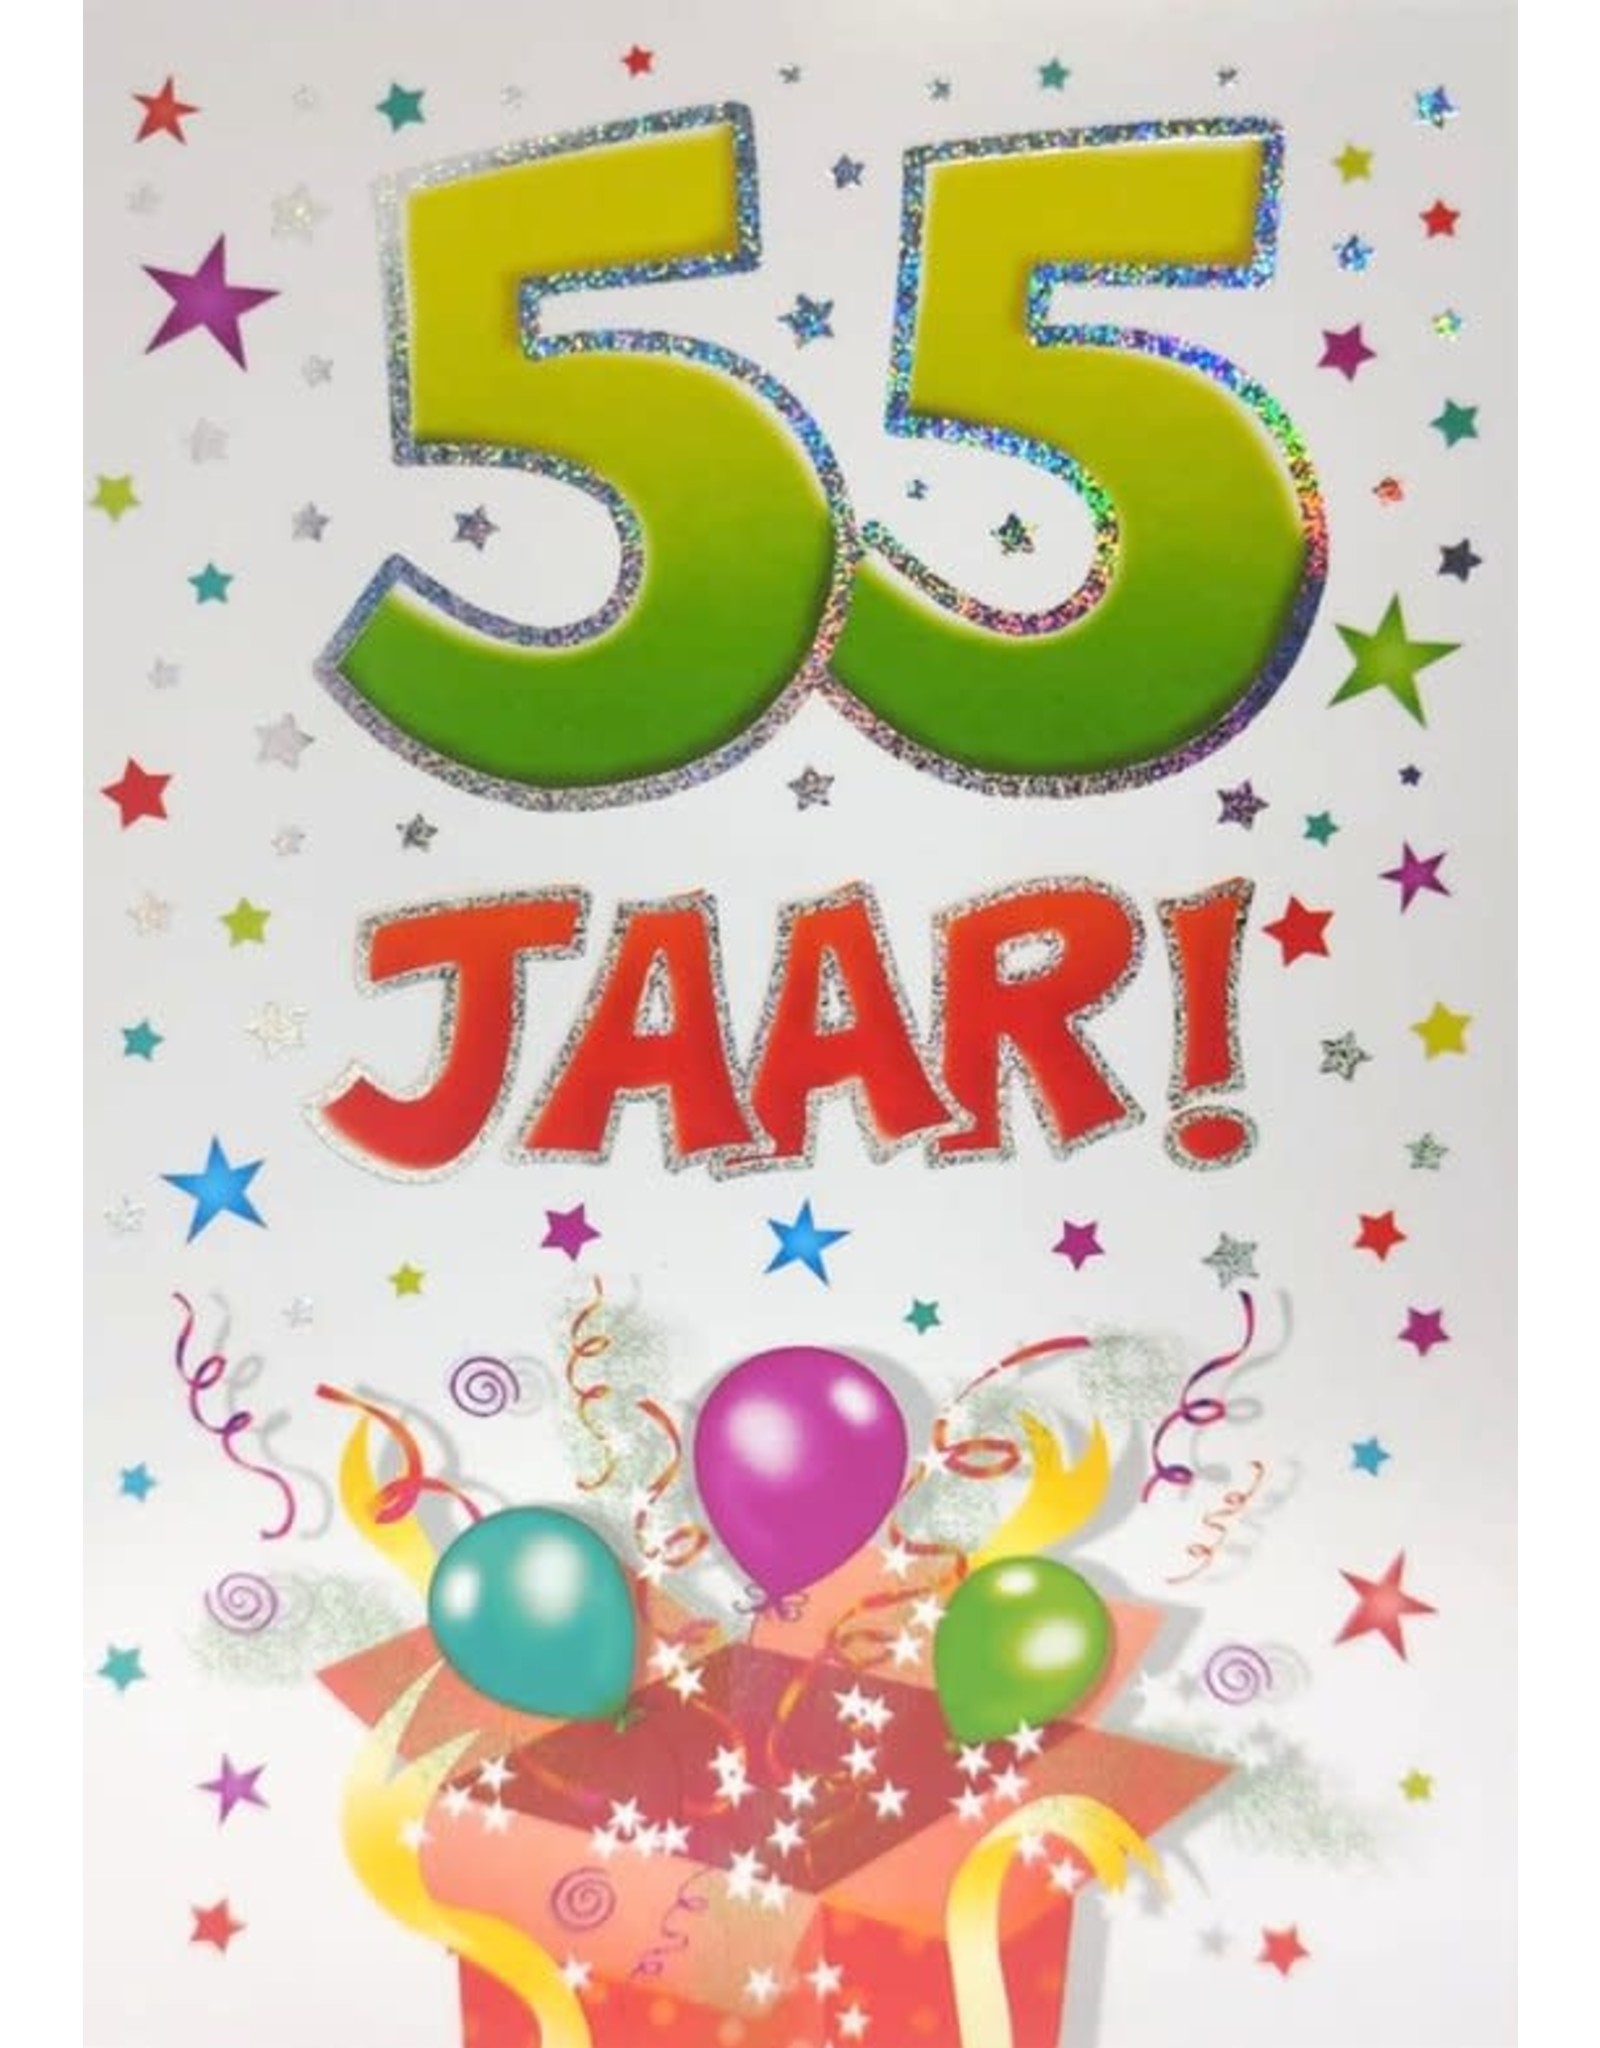 ARTIGE Kaart - That funny age - 55 Jaar - AT1039